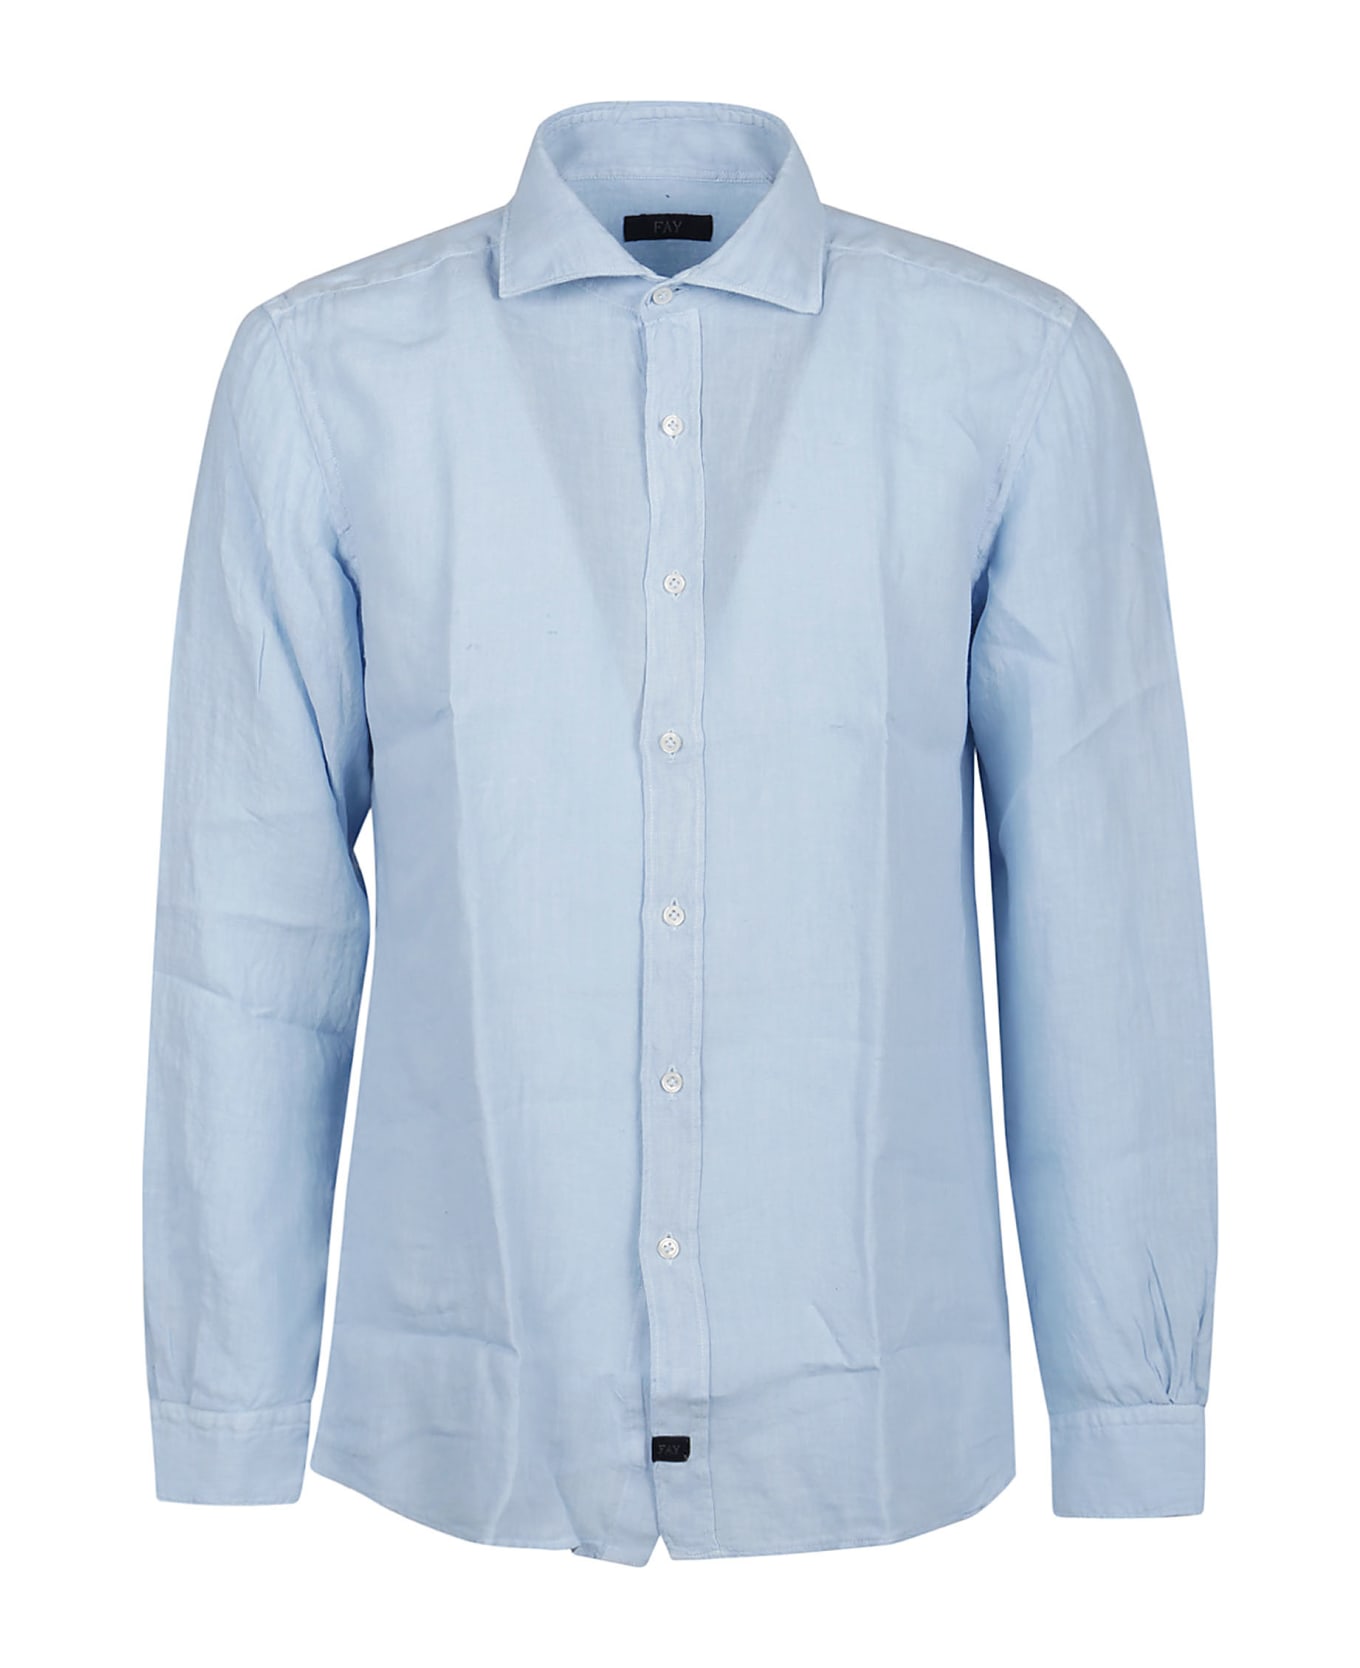 Fay Long Sleeve French Collar Shirt - Light blue